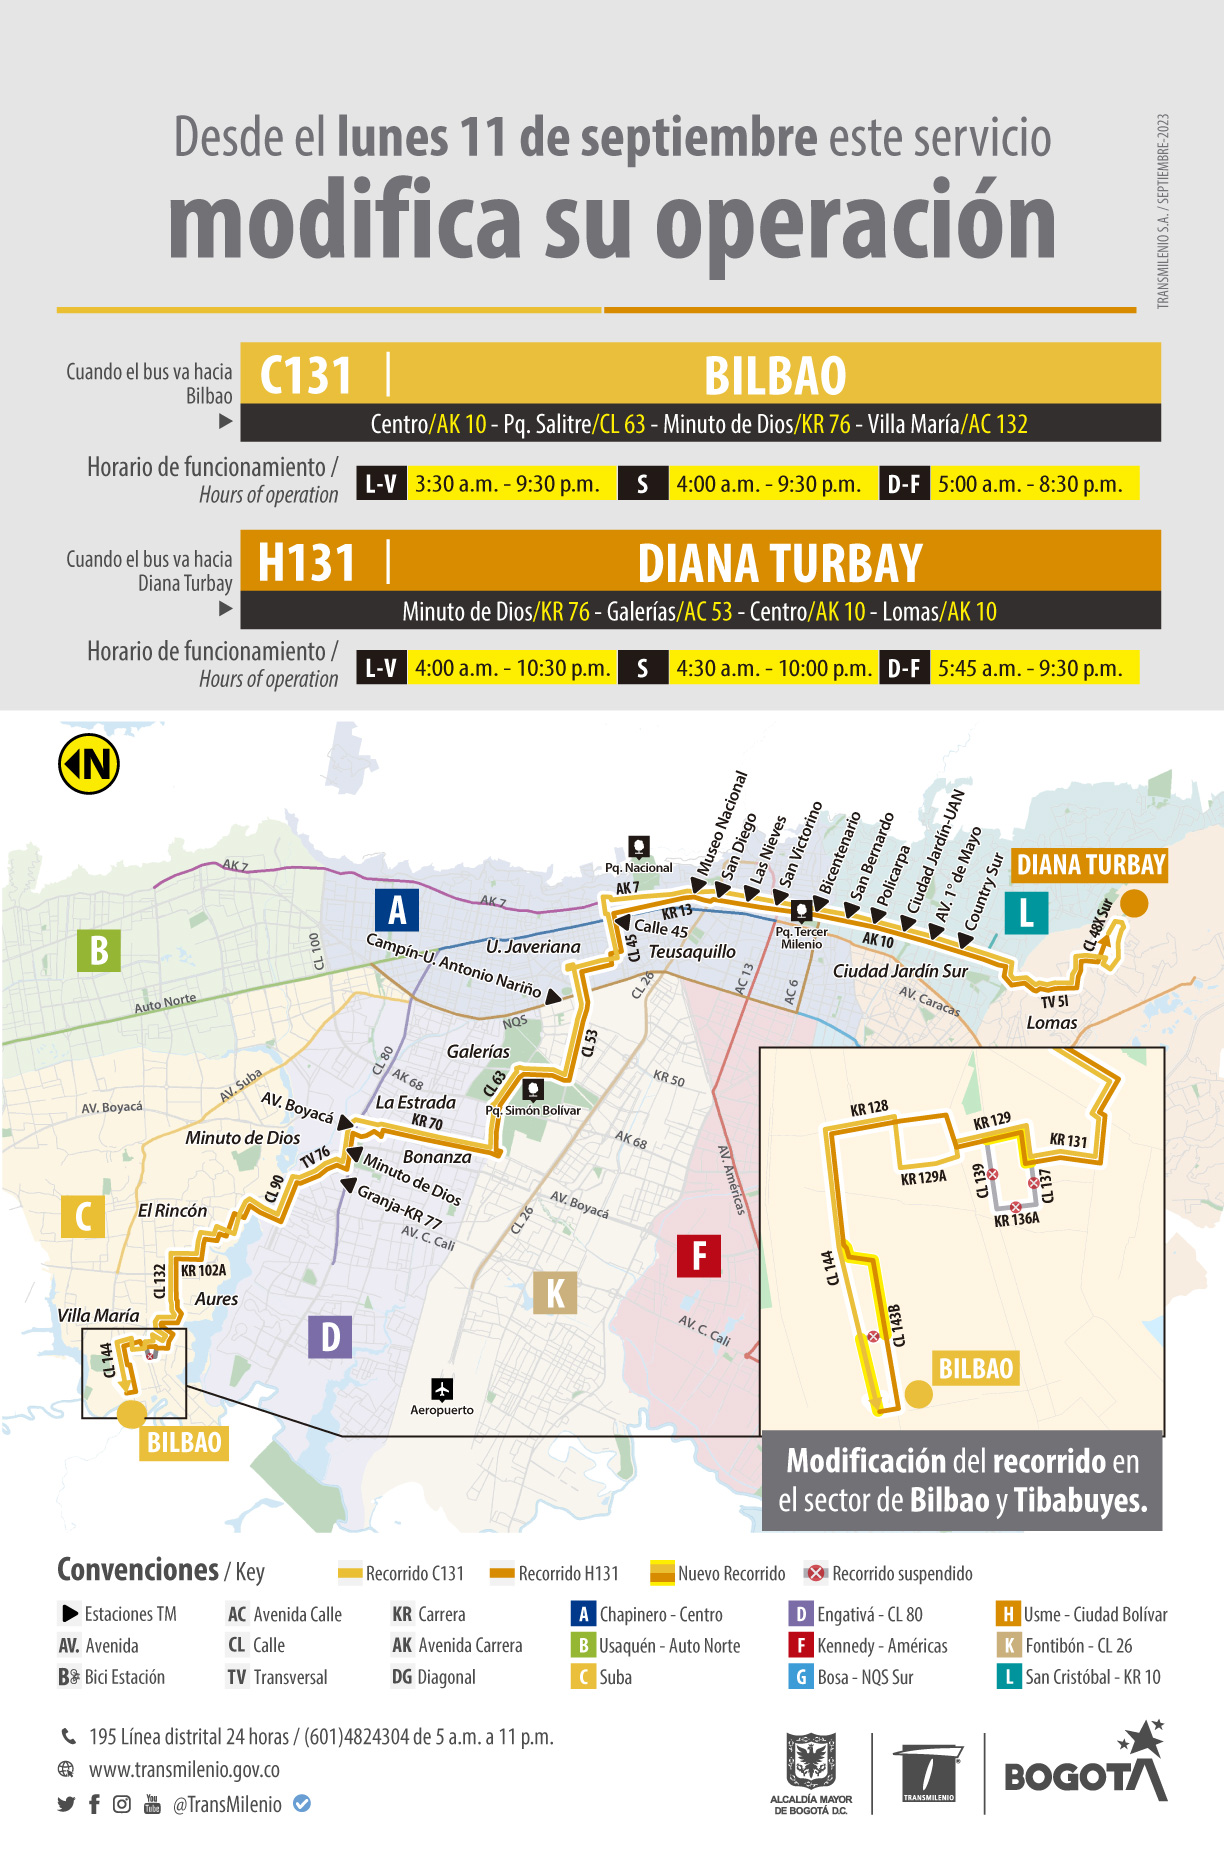 Modificación del recorrido de ruta zonal C131 Bilbao-H131 Diana Turbay